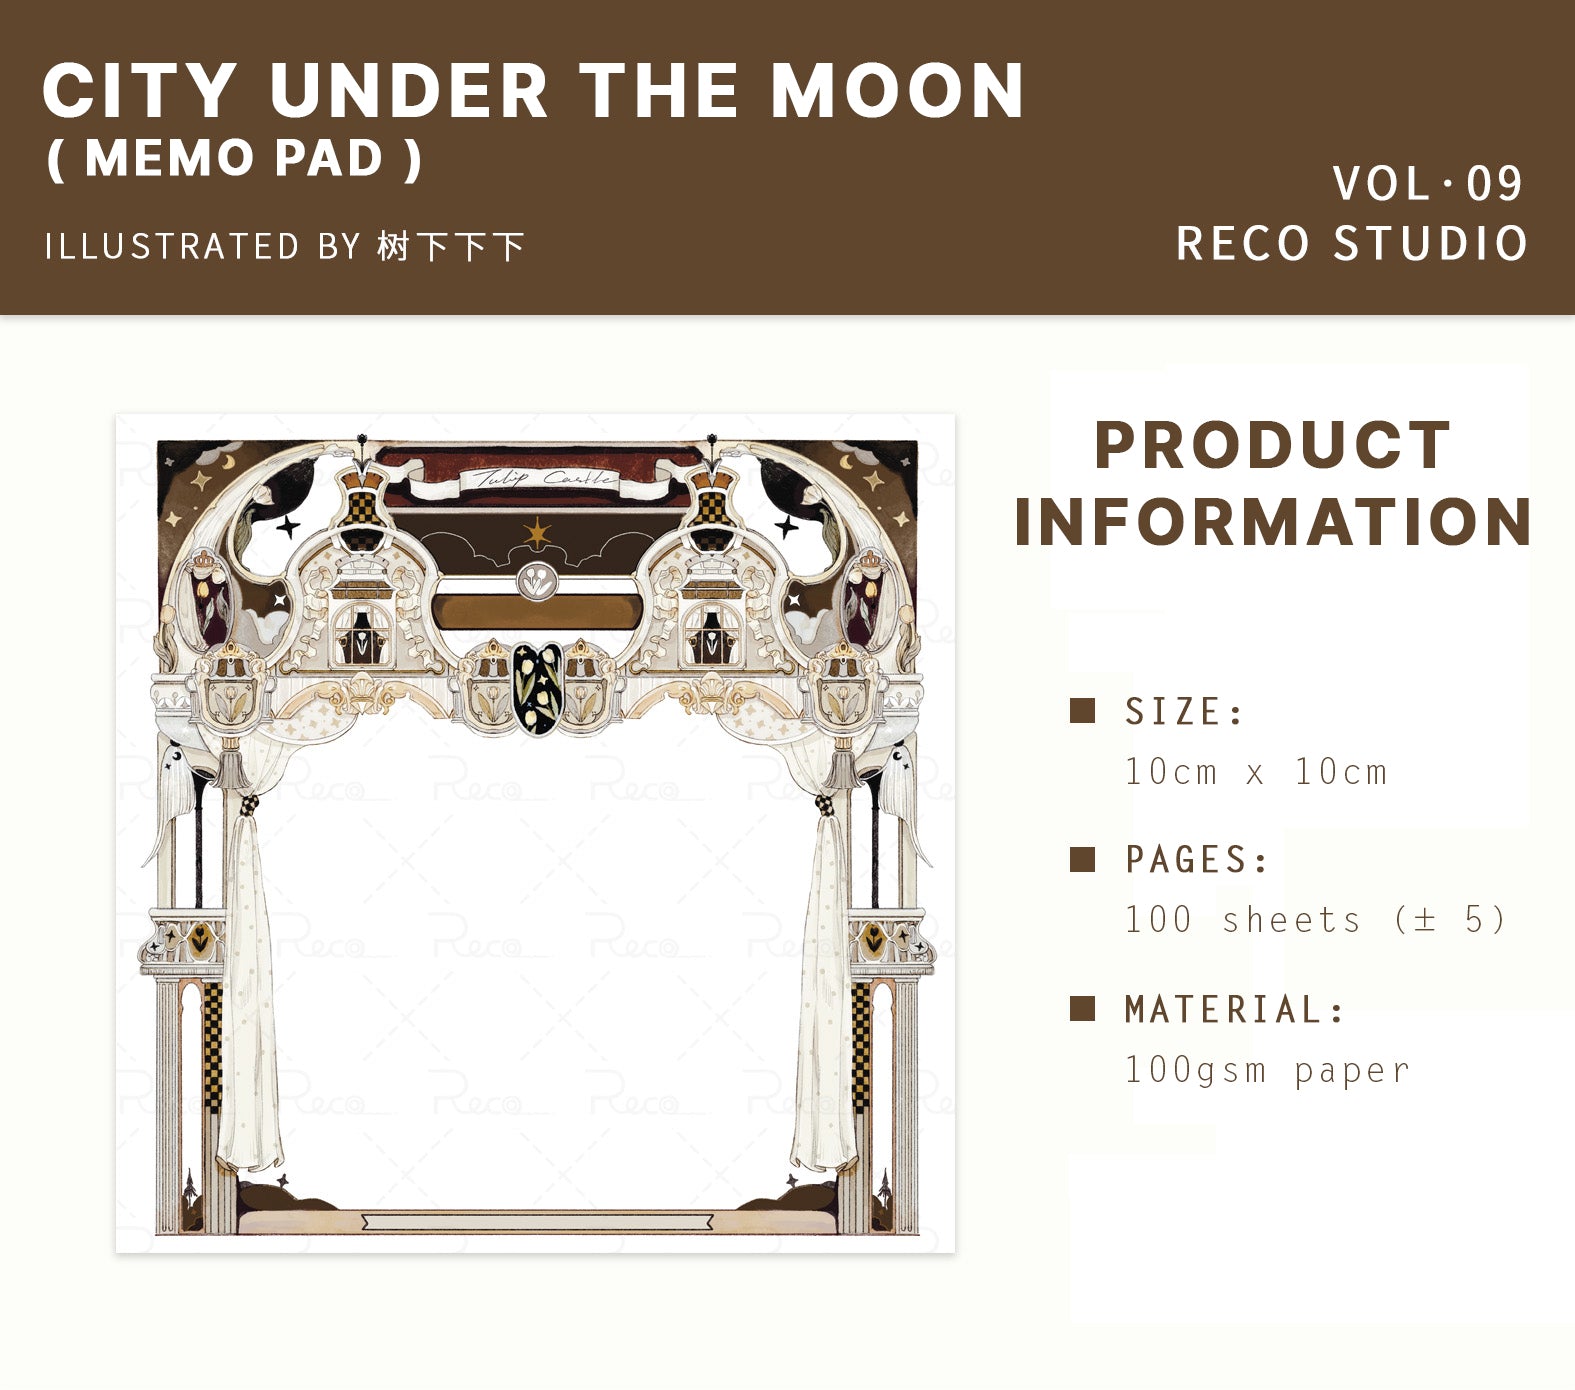 Reco Studio Memo Pad: City Under the Moon